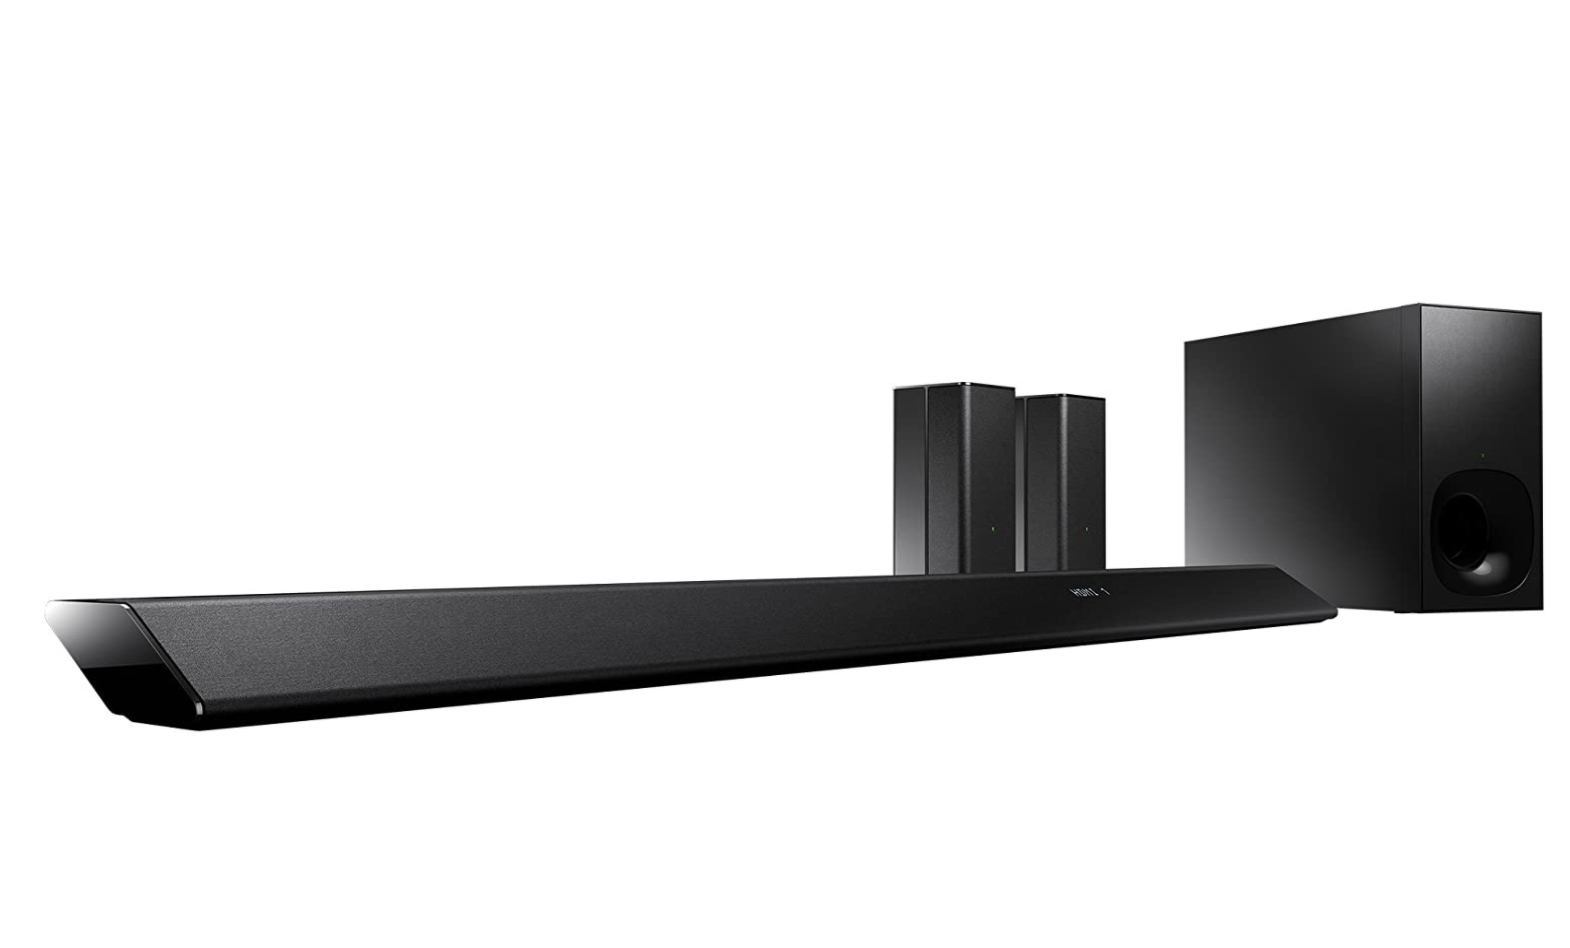 Sony HT-RT5 Soundbar Home Theater System + Wireless Rear Speakers and | eBay